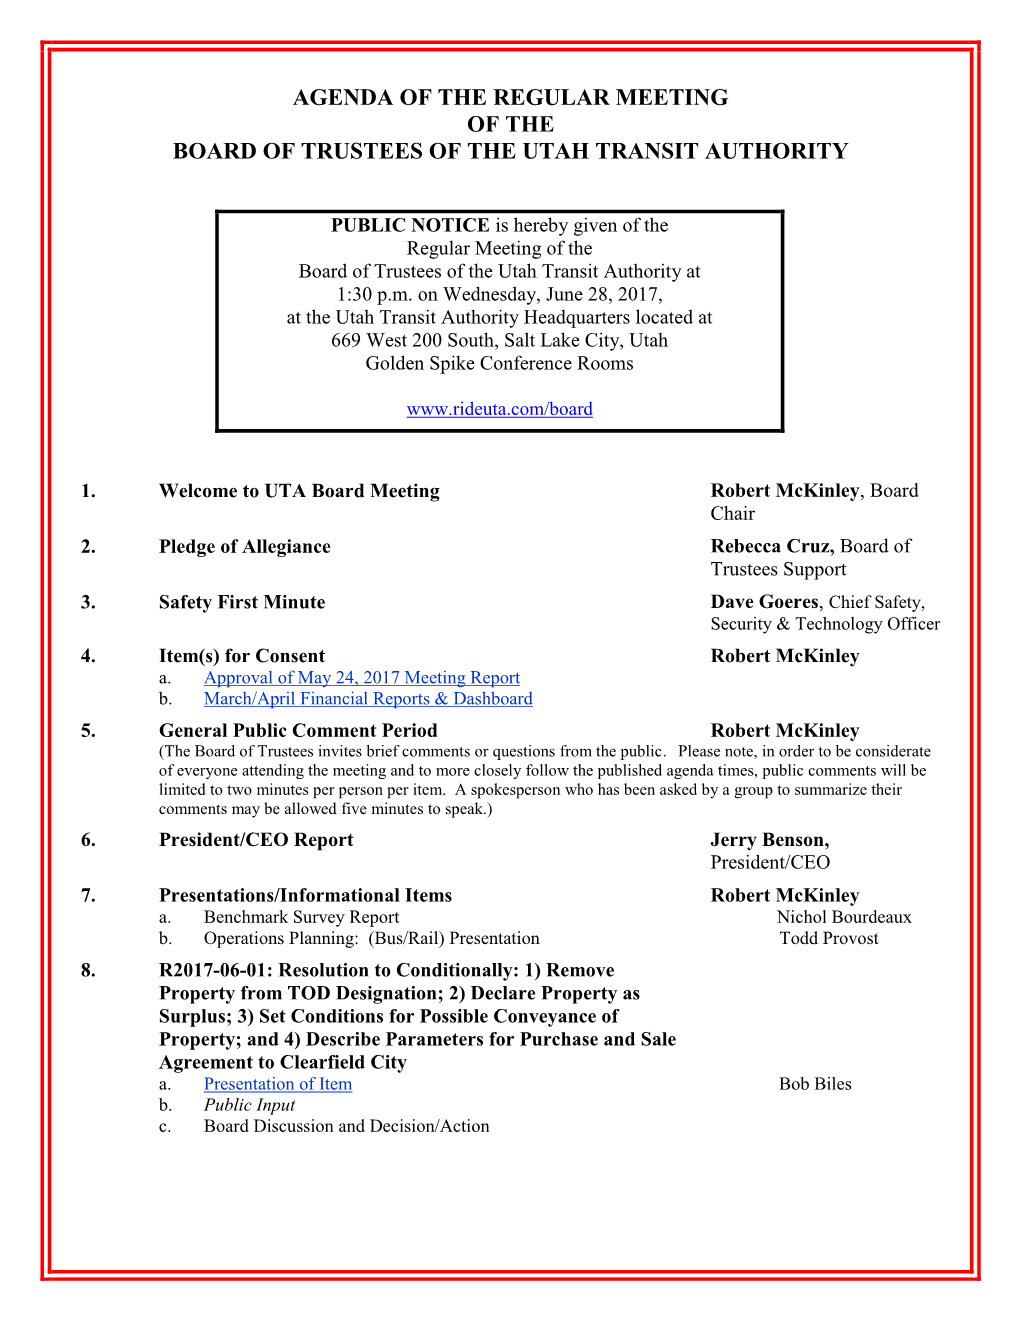 Agenda of the Regular Meeting of the Board of Trustees of the Utah Transit Authority